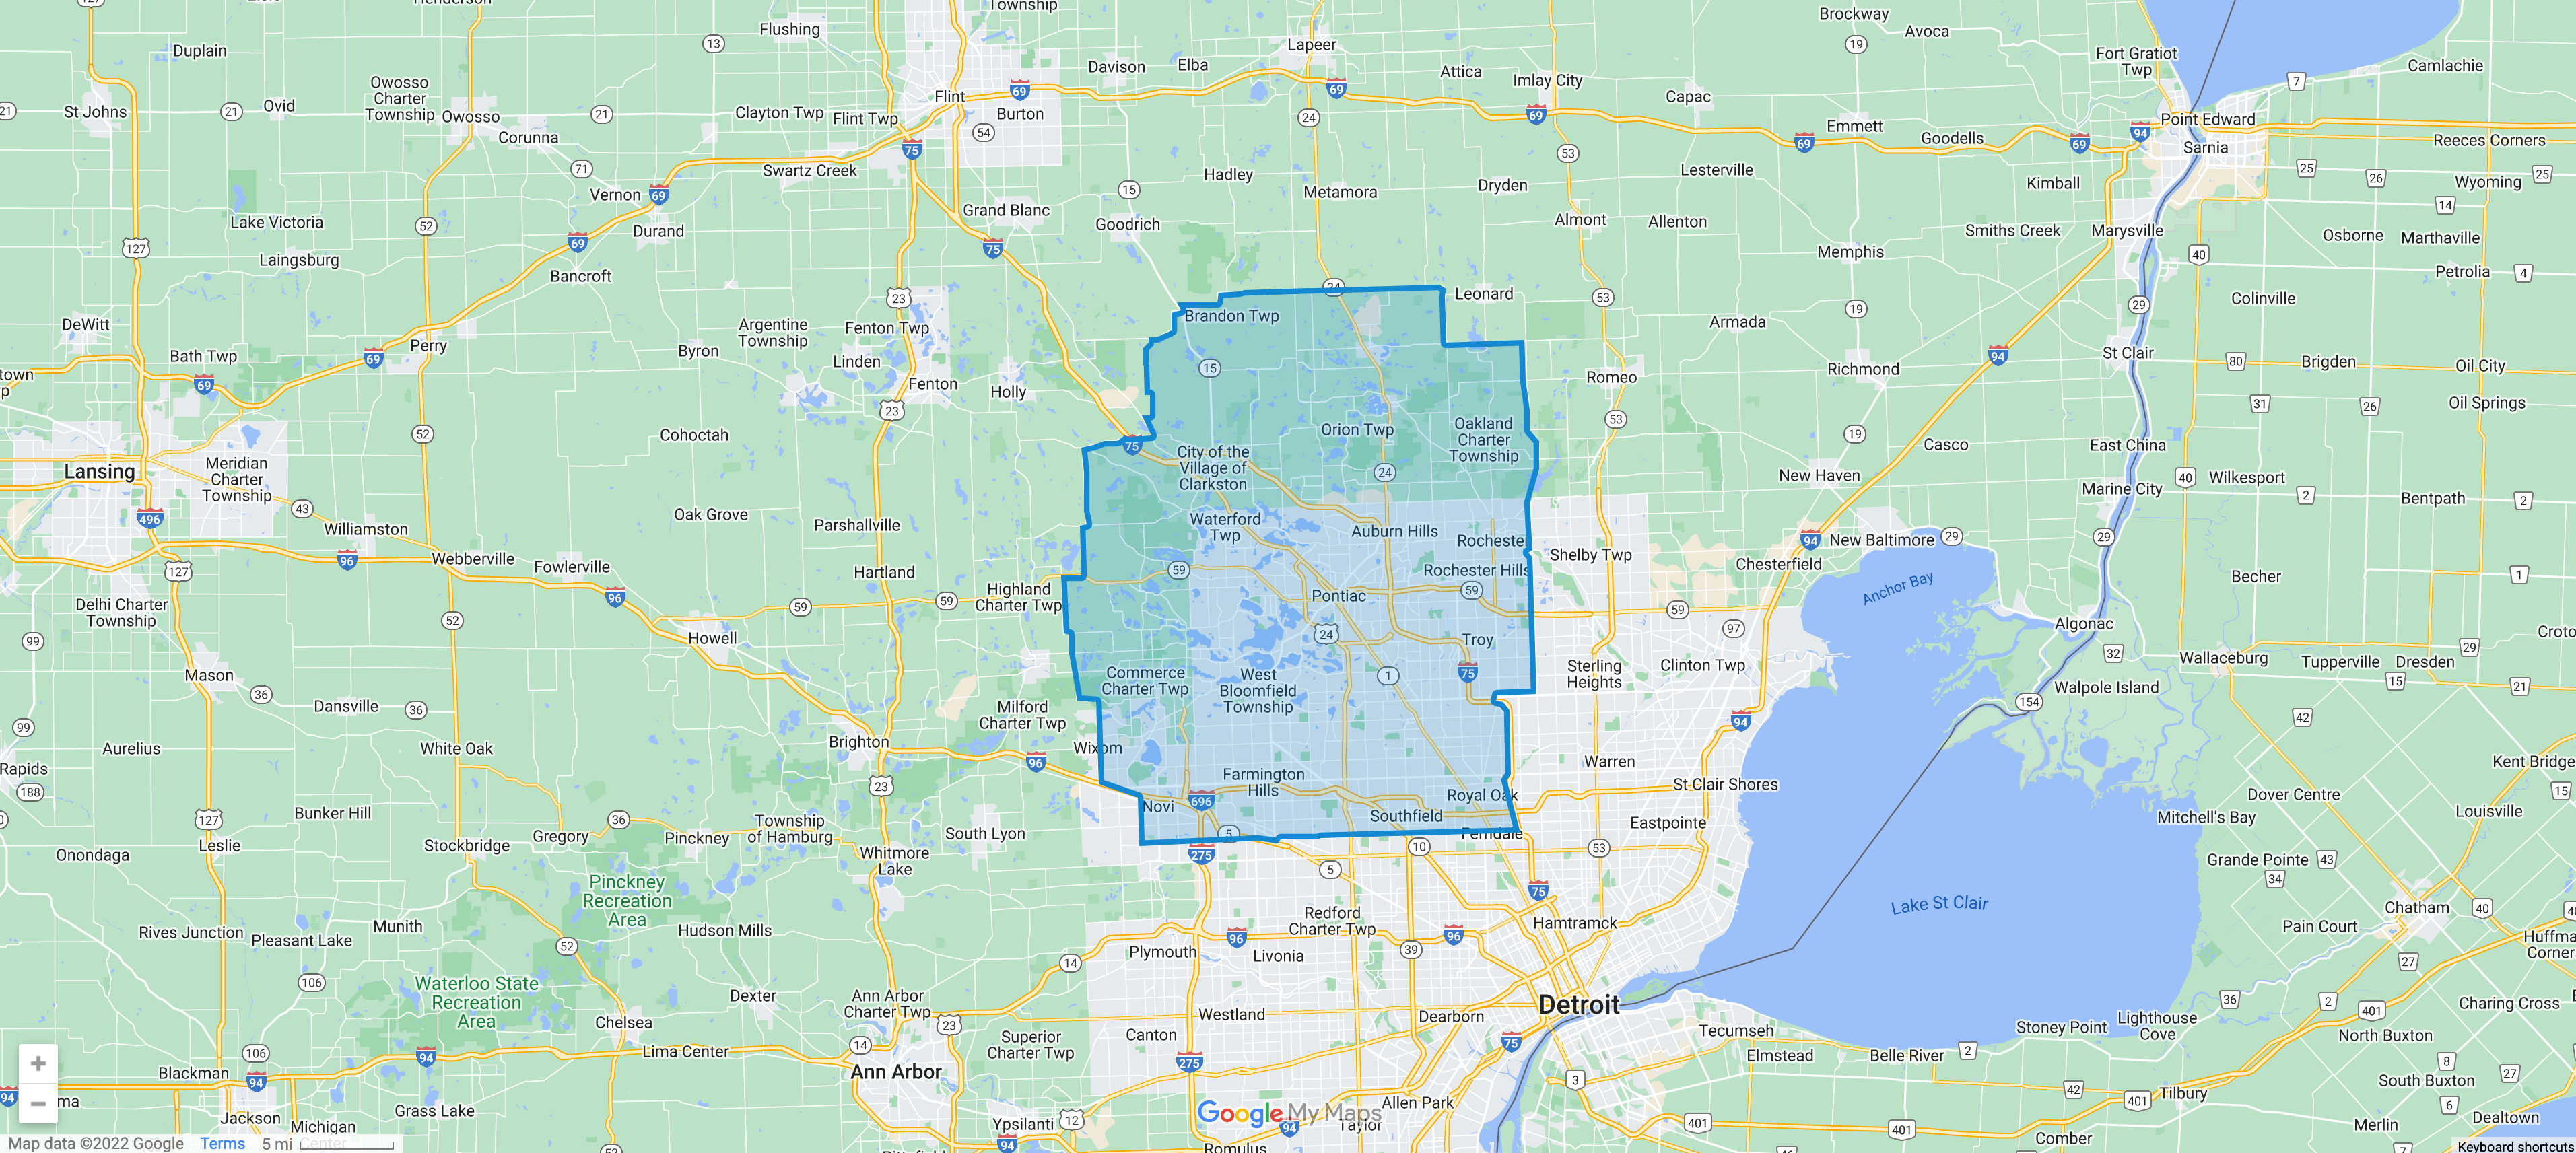 Groom Buggy service area map - approximately a 10 mile radius around Clarkston, MI